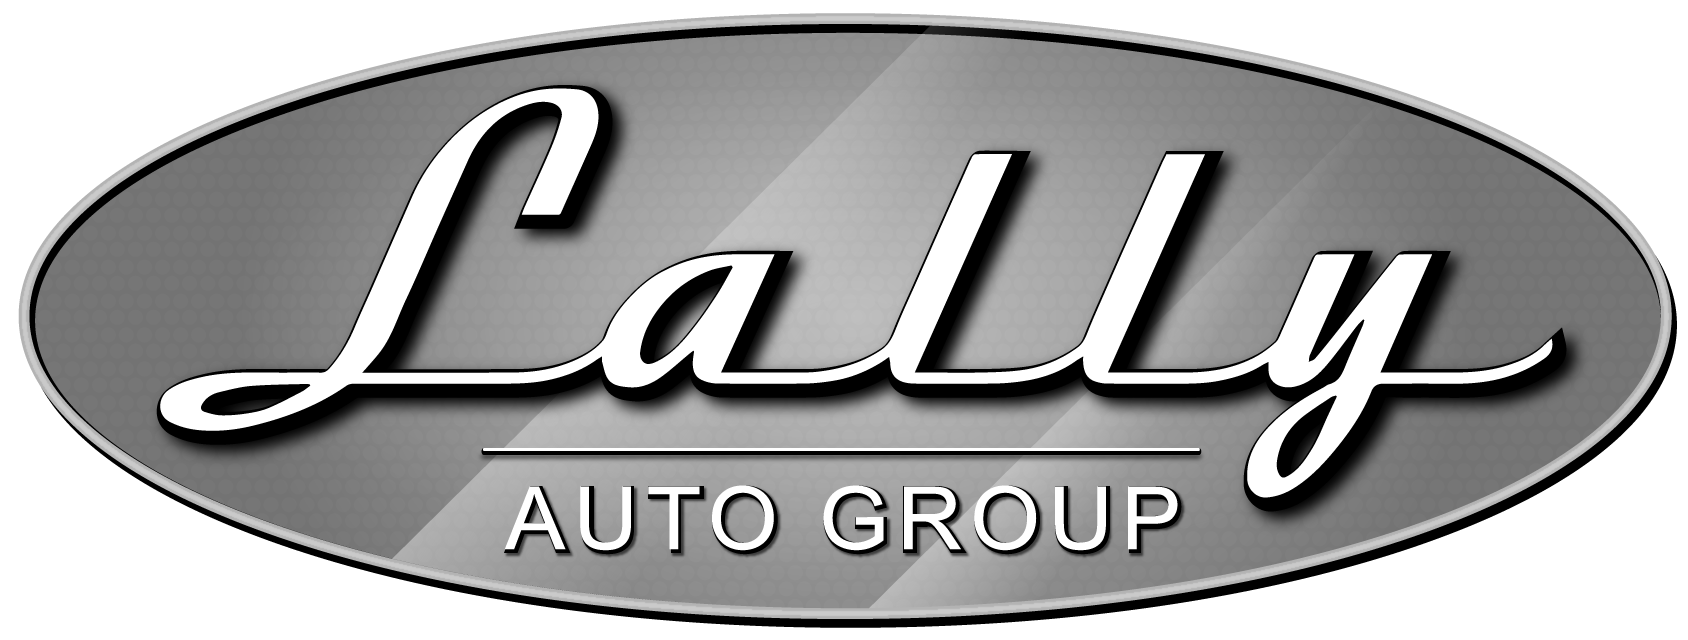 LallyAutoGroup-Logo